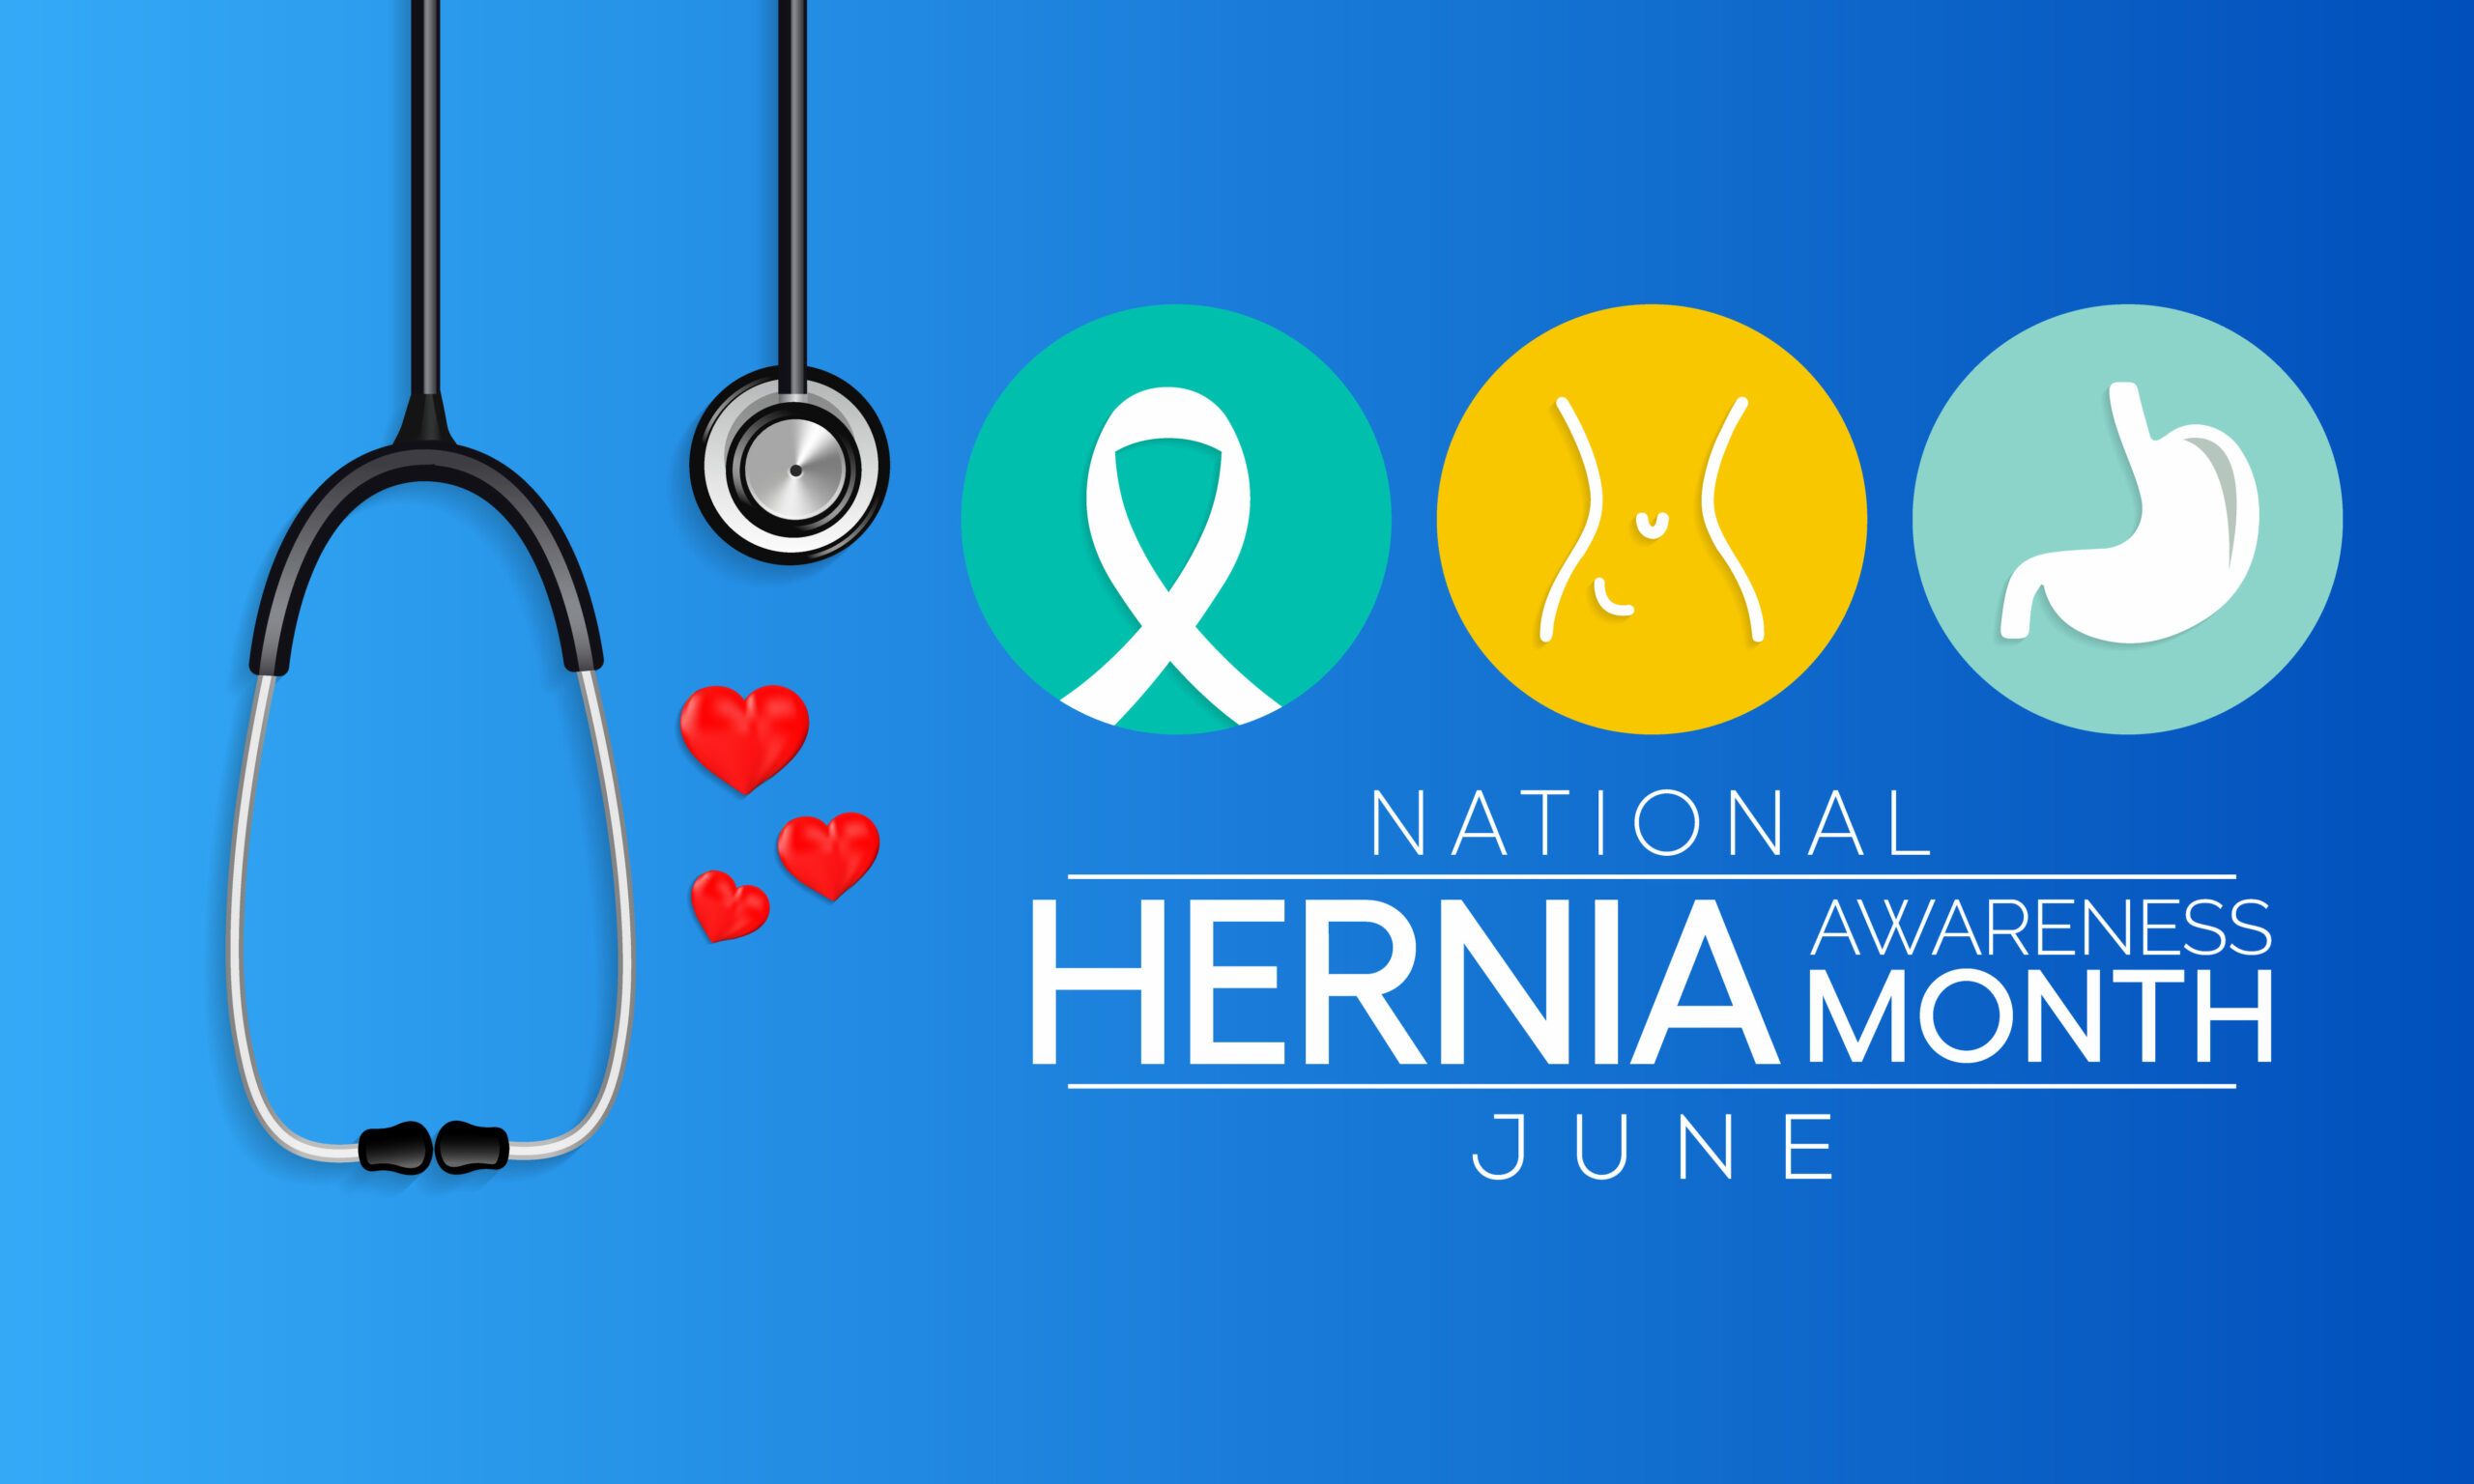 June is National Hernia Awareness Month